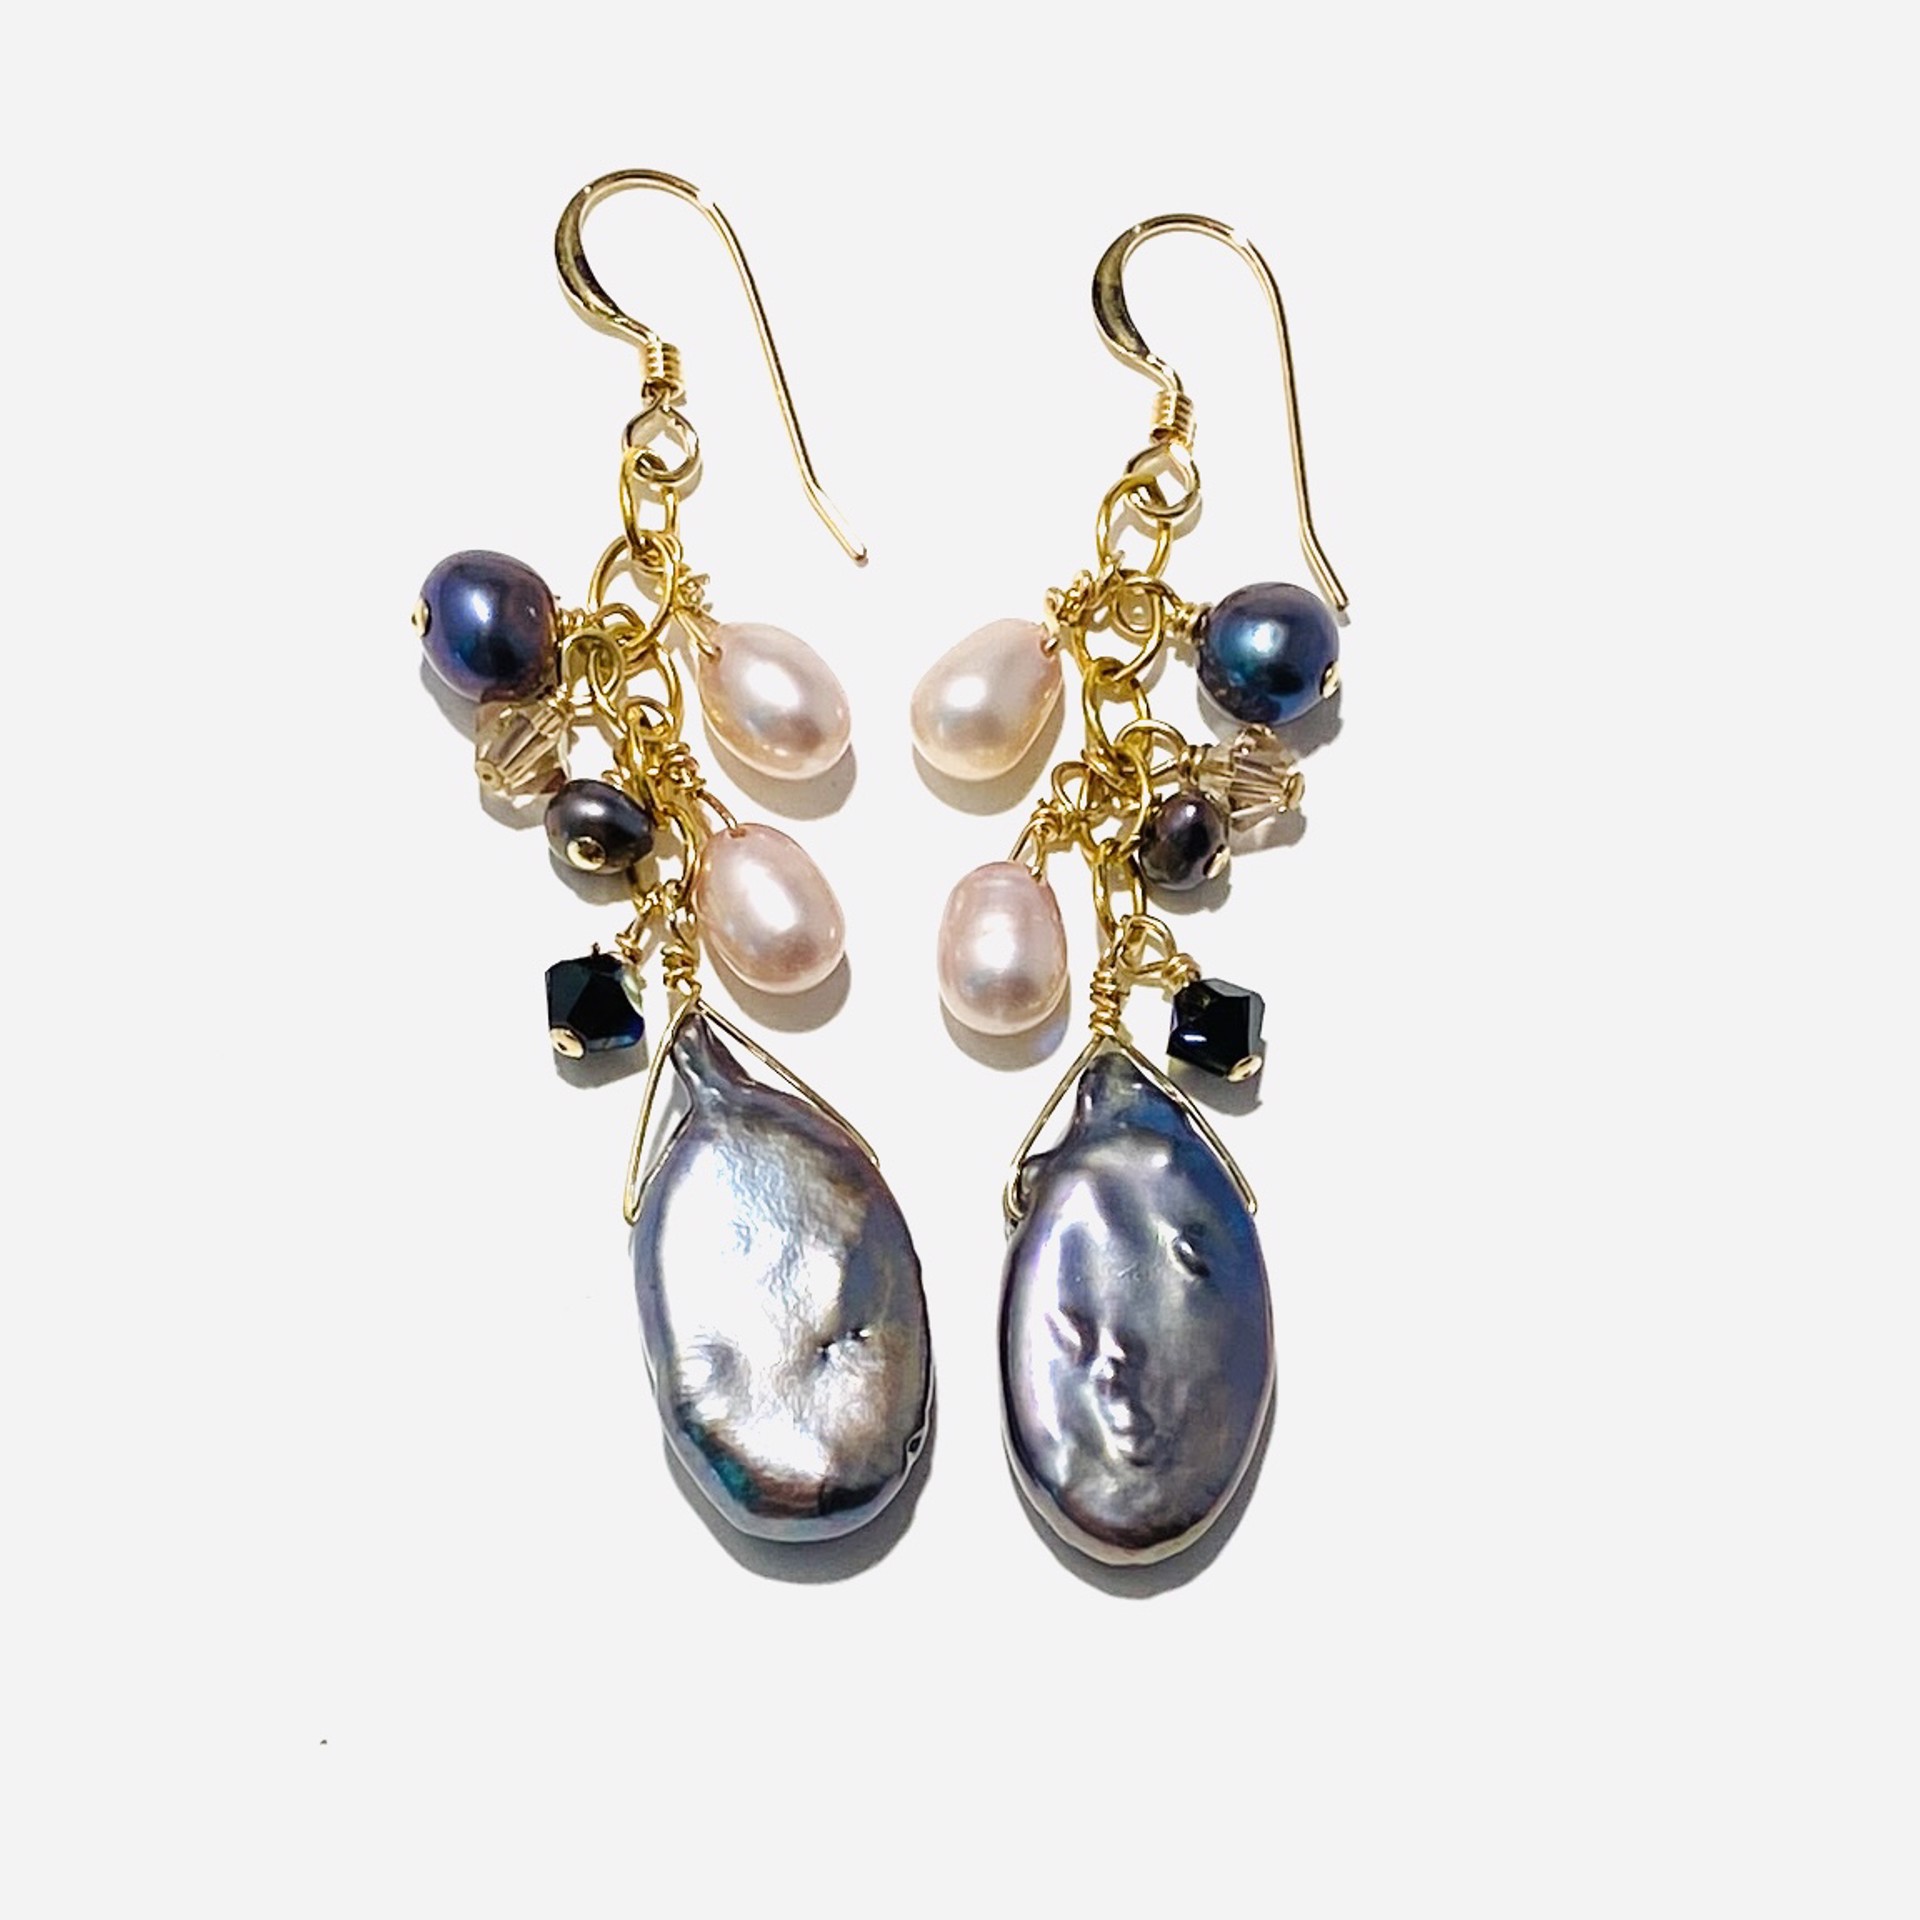 Peacock Drop Pearl, Pink Pearl, Swarovski Crystal GF Earrings LR23-19 by Legare Riano